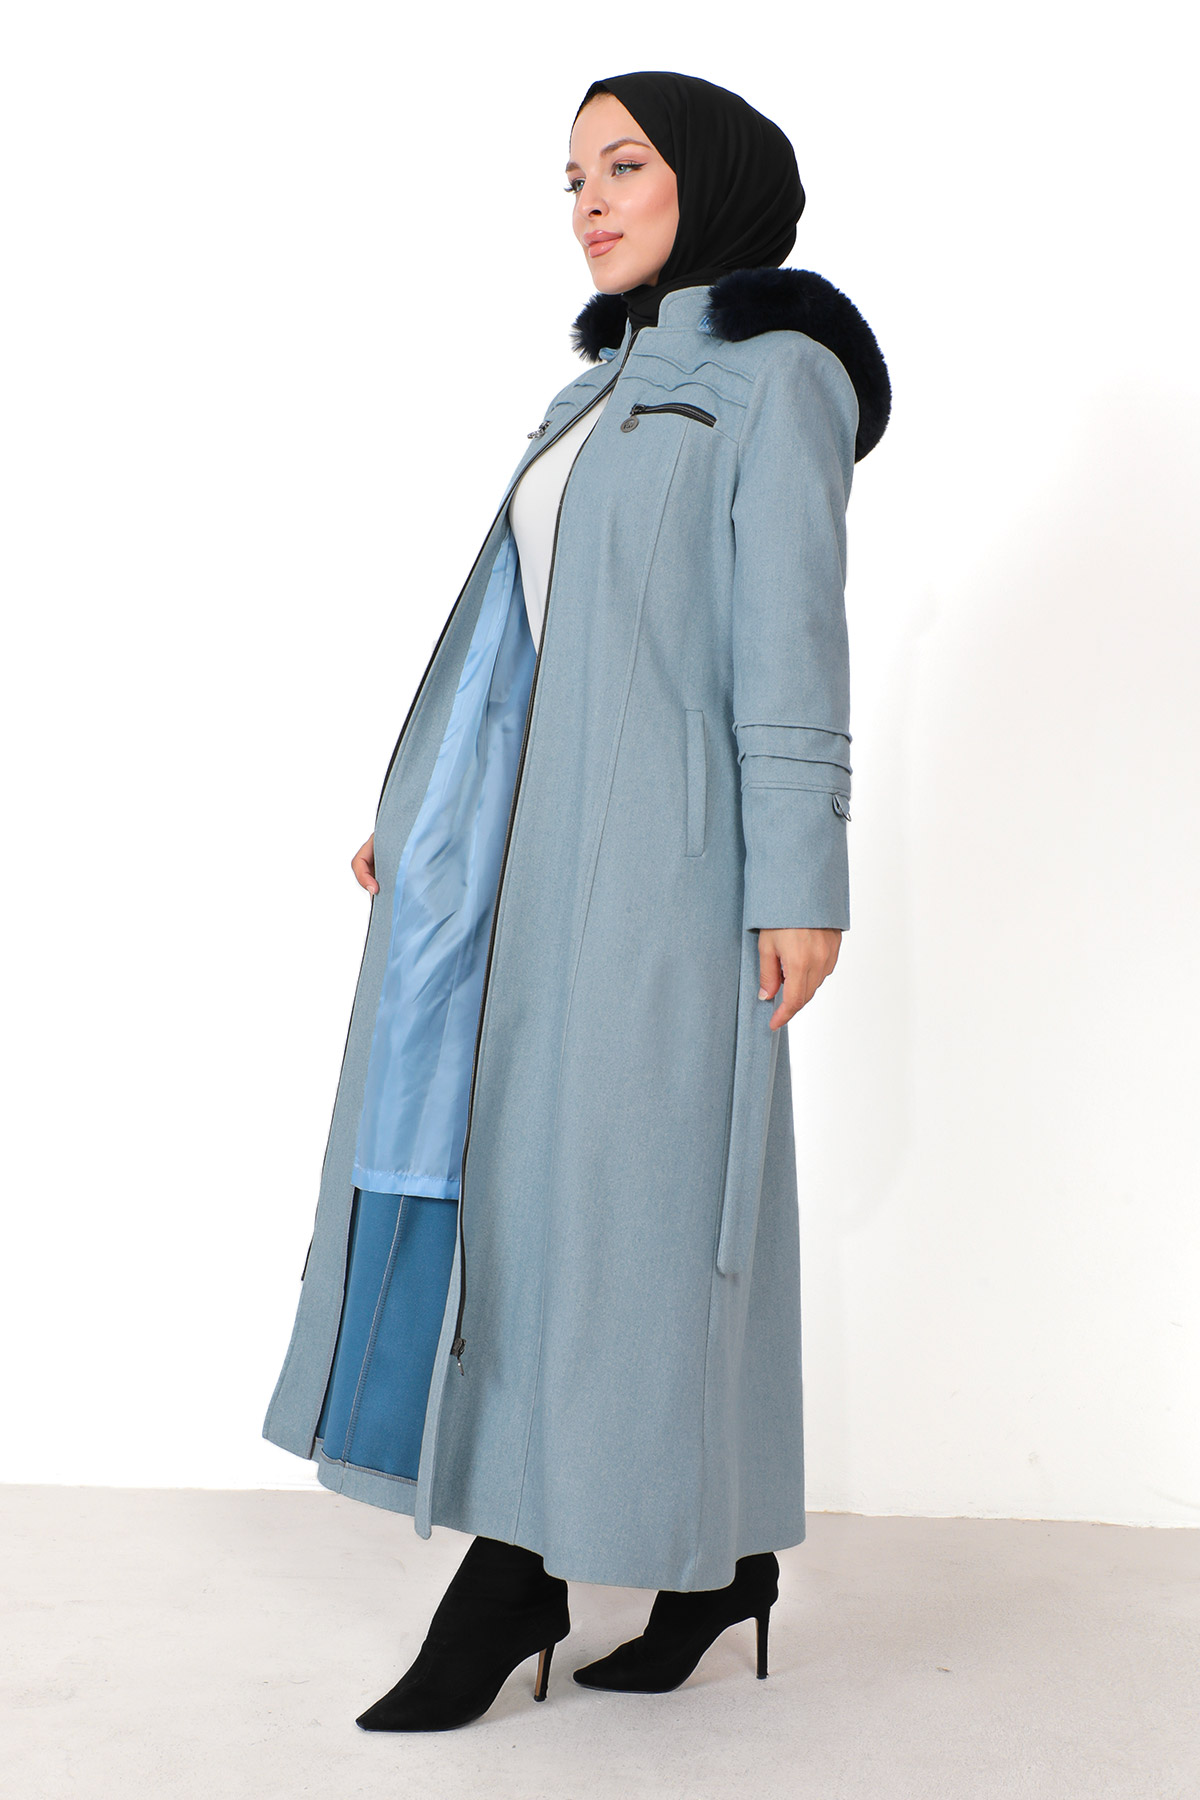 turkish islamic women's clothing online